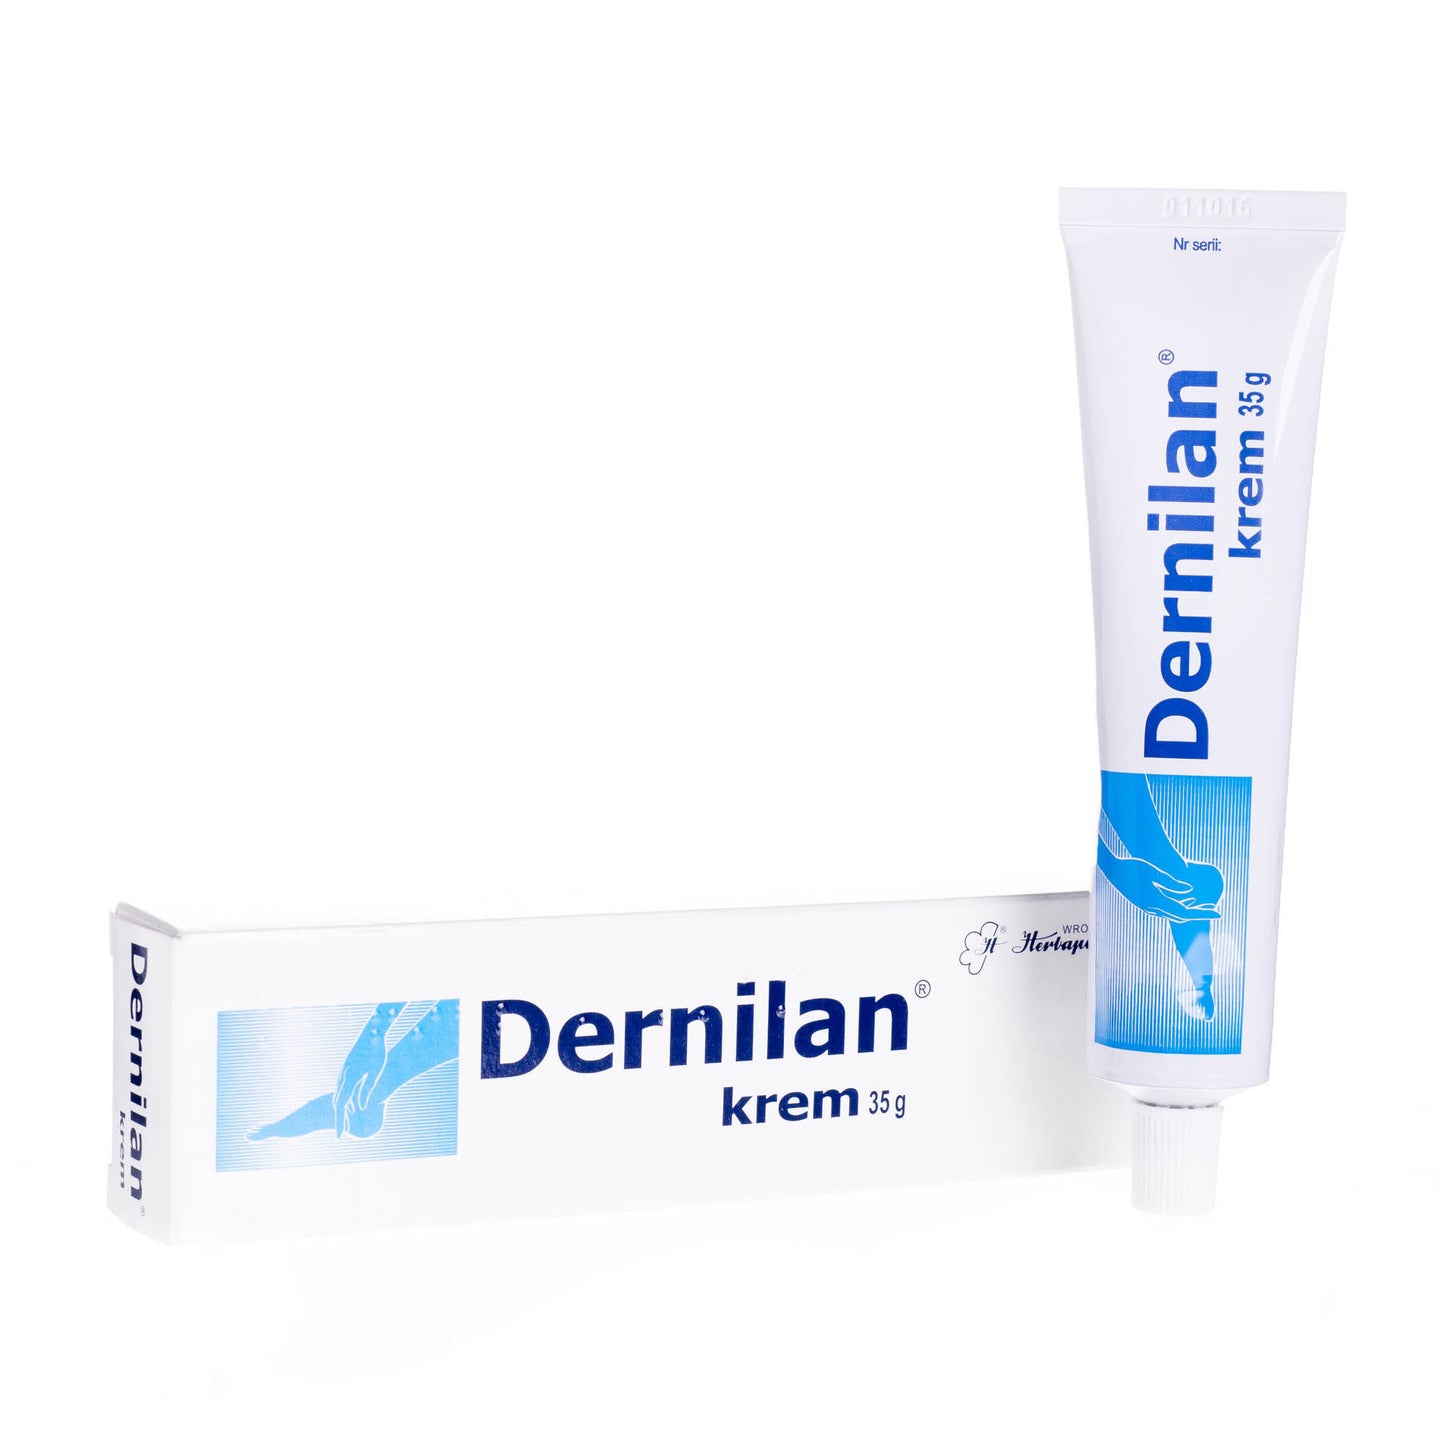 Dernilan cream 35g